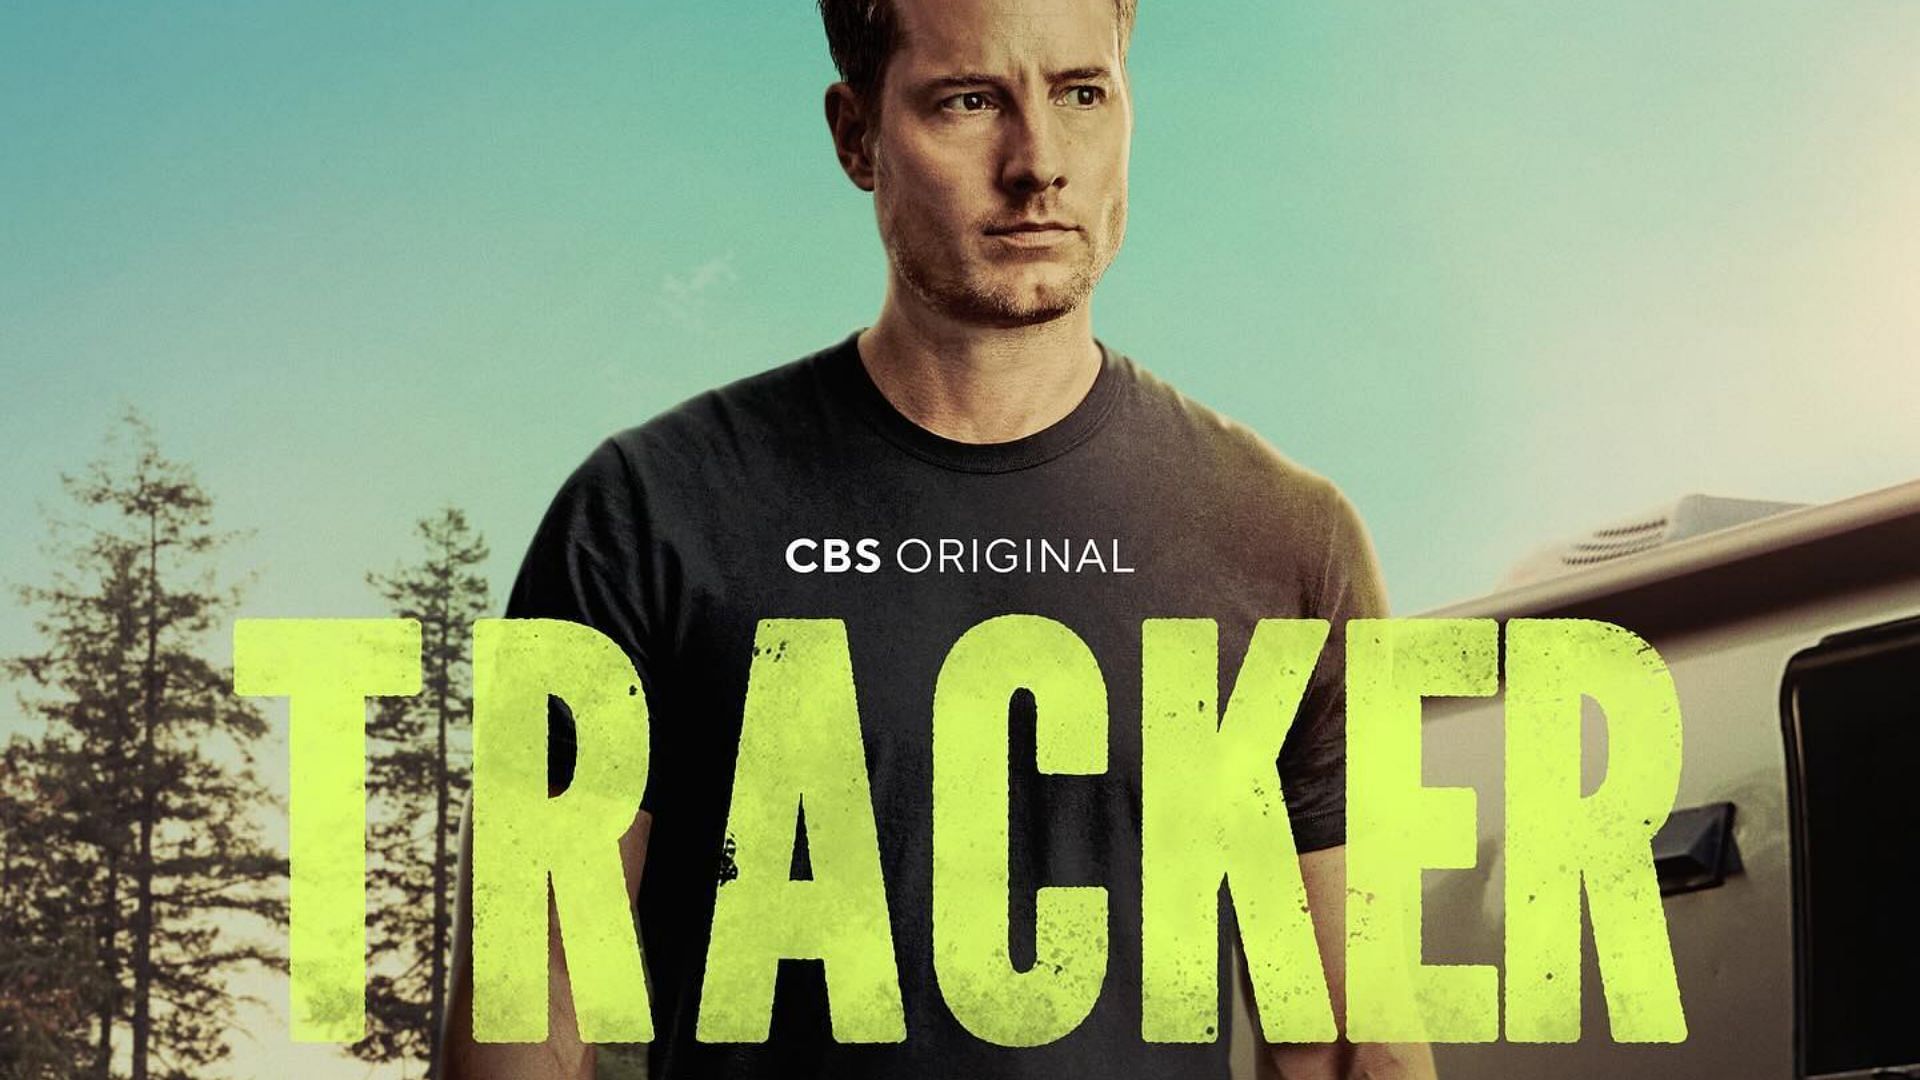 CBS Original Tracker series (Image via @cbstv/ Instagram)